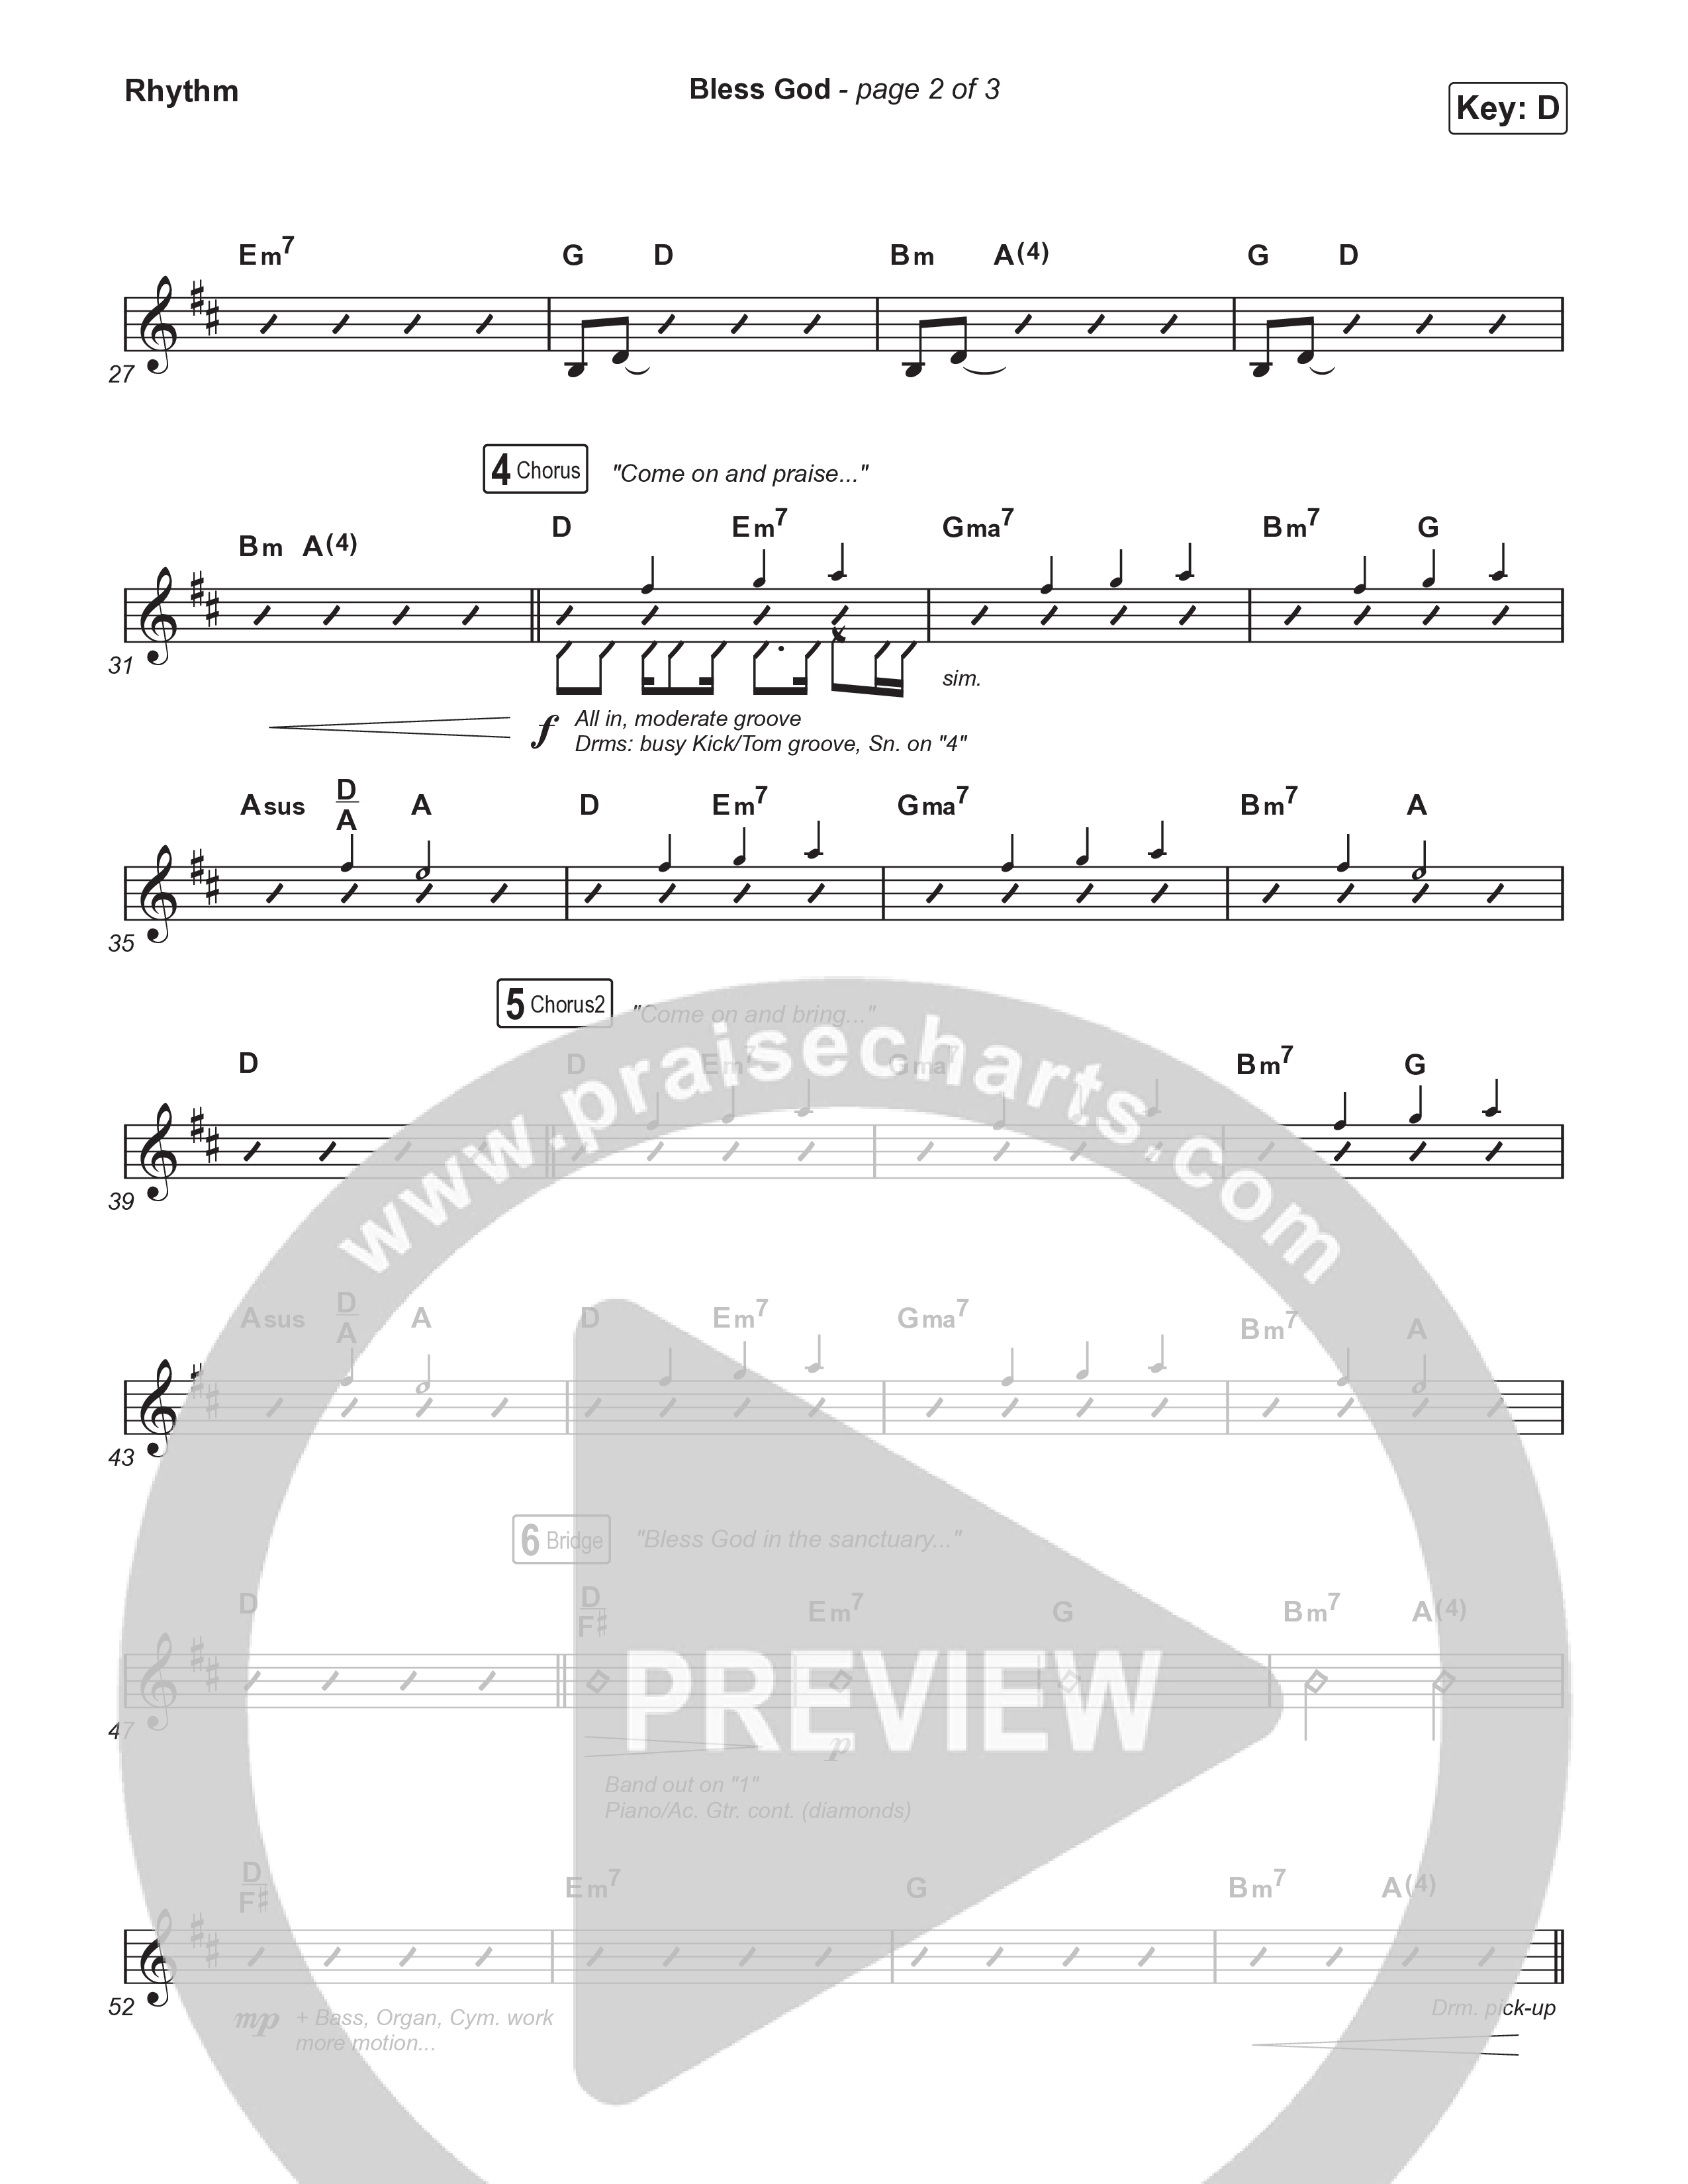 Bless God (Choral Anthem SATB) Rhythm Pack (Brooke Ligertwood / Arr. Luke Gambill)